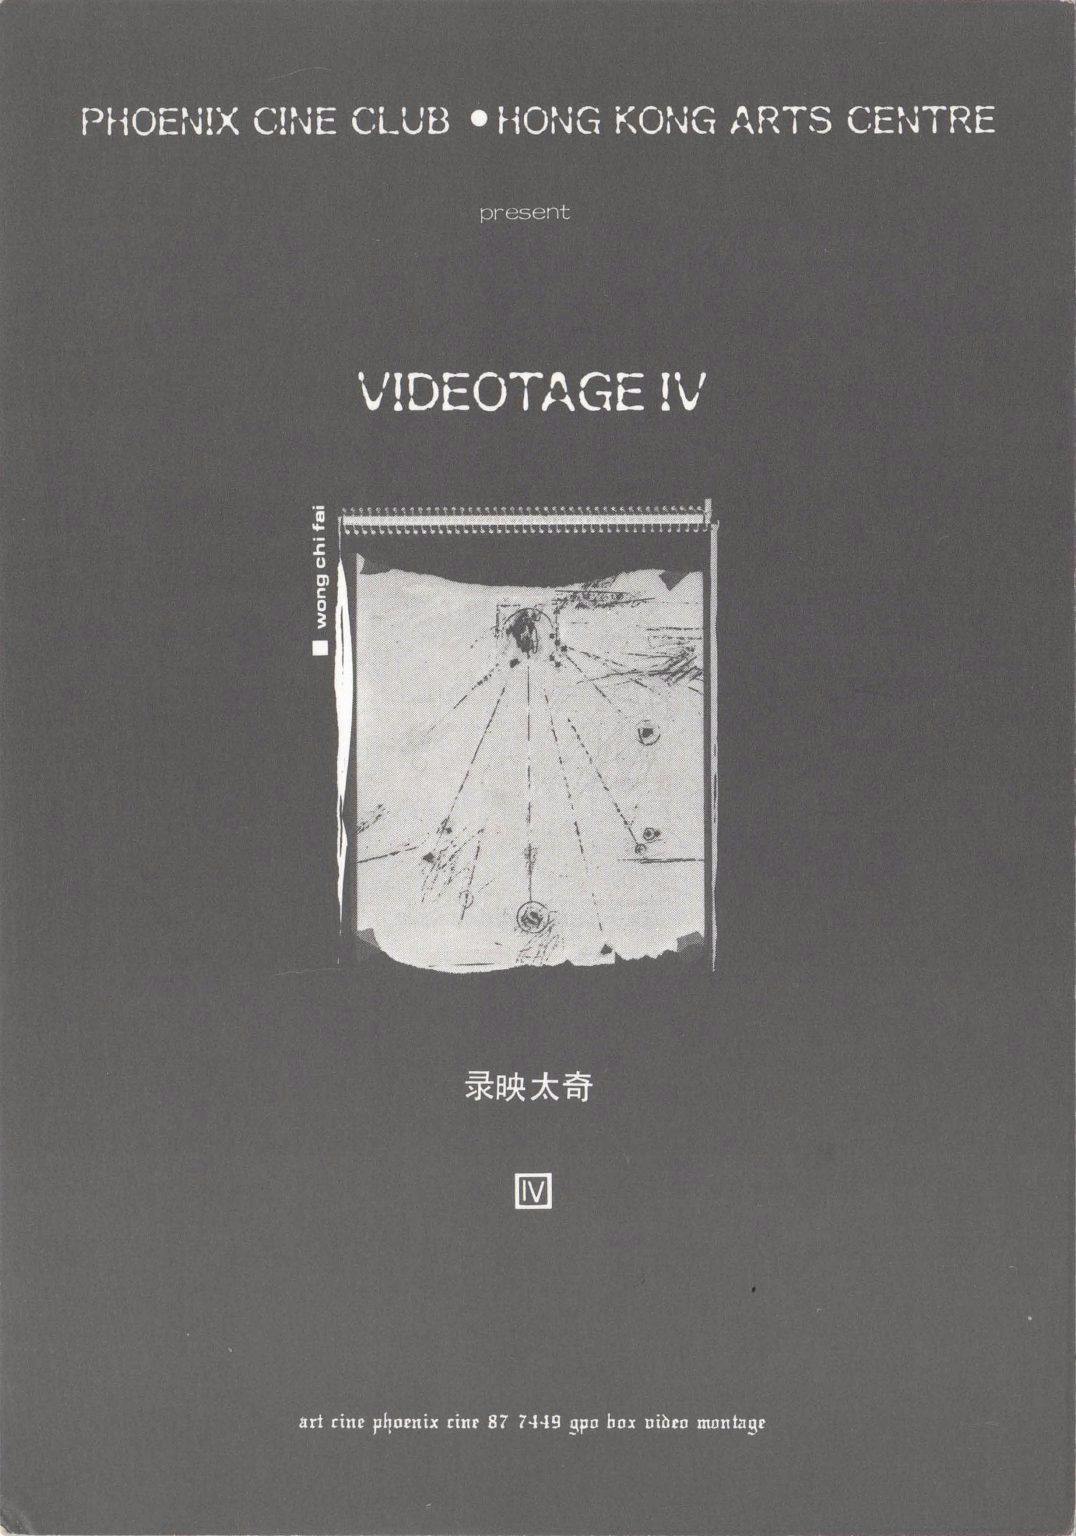 Videotage IV – Postcard (1) 錄影太奇 IV – 明信片 (1)